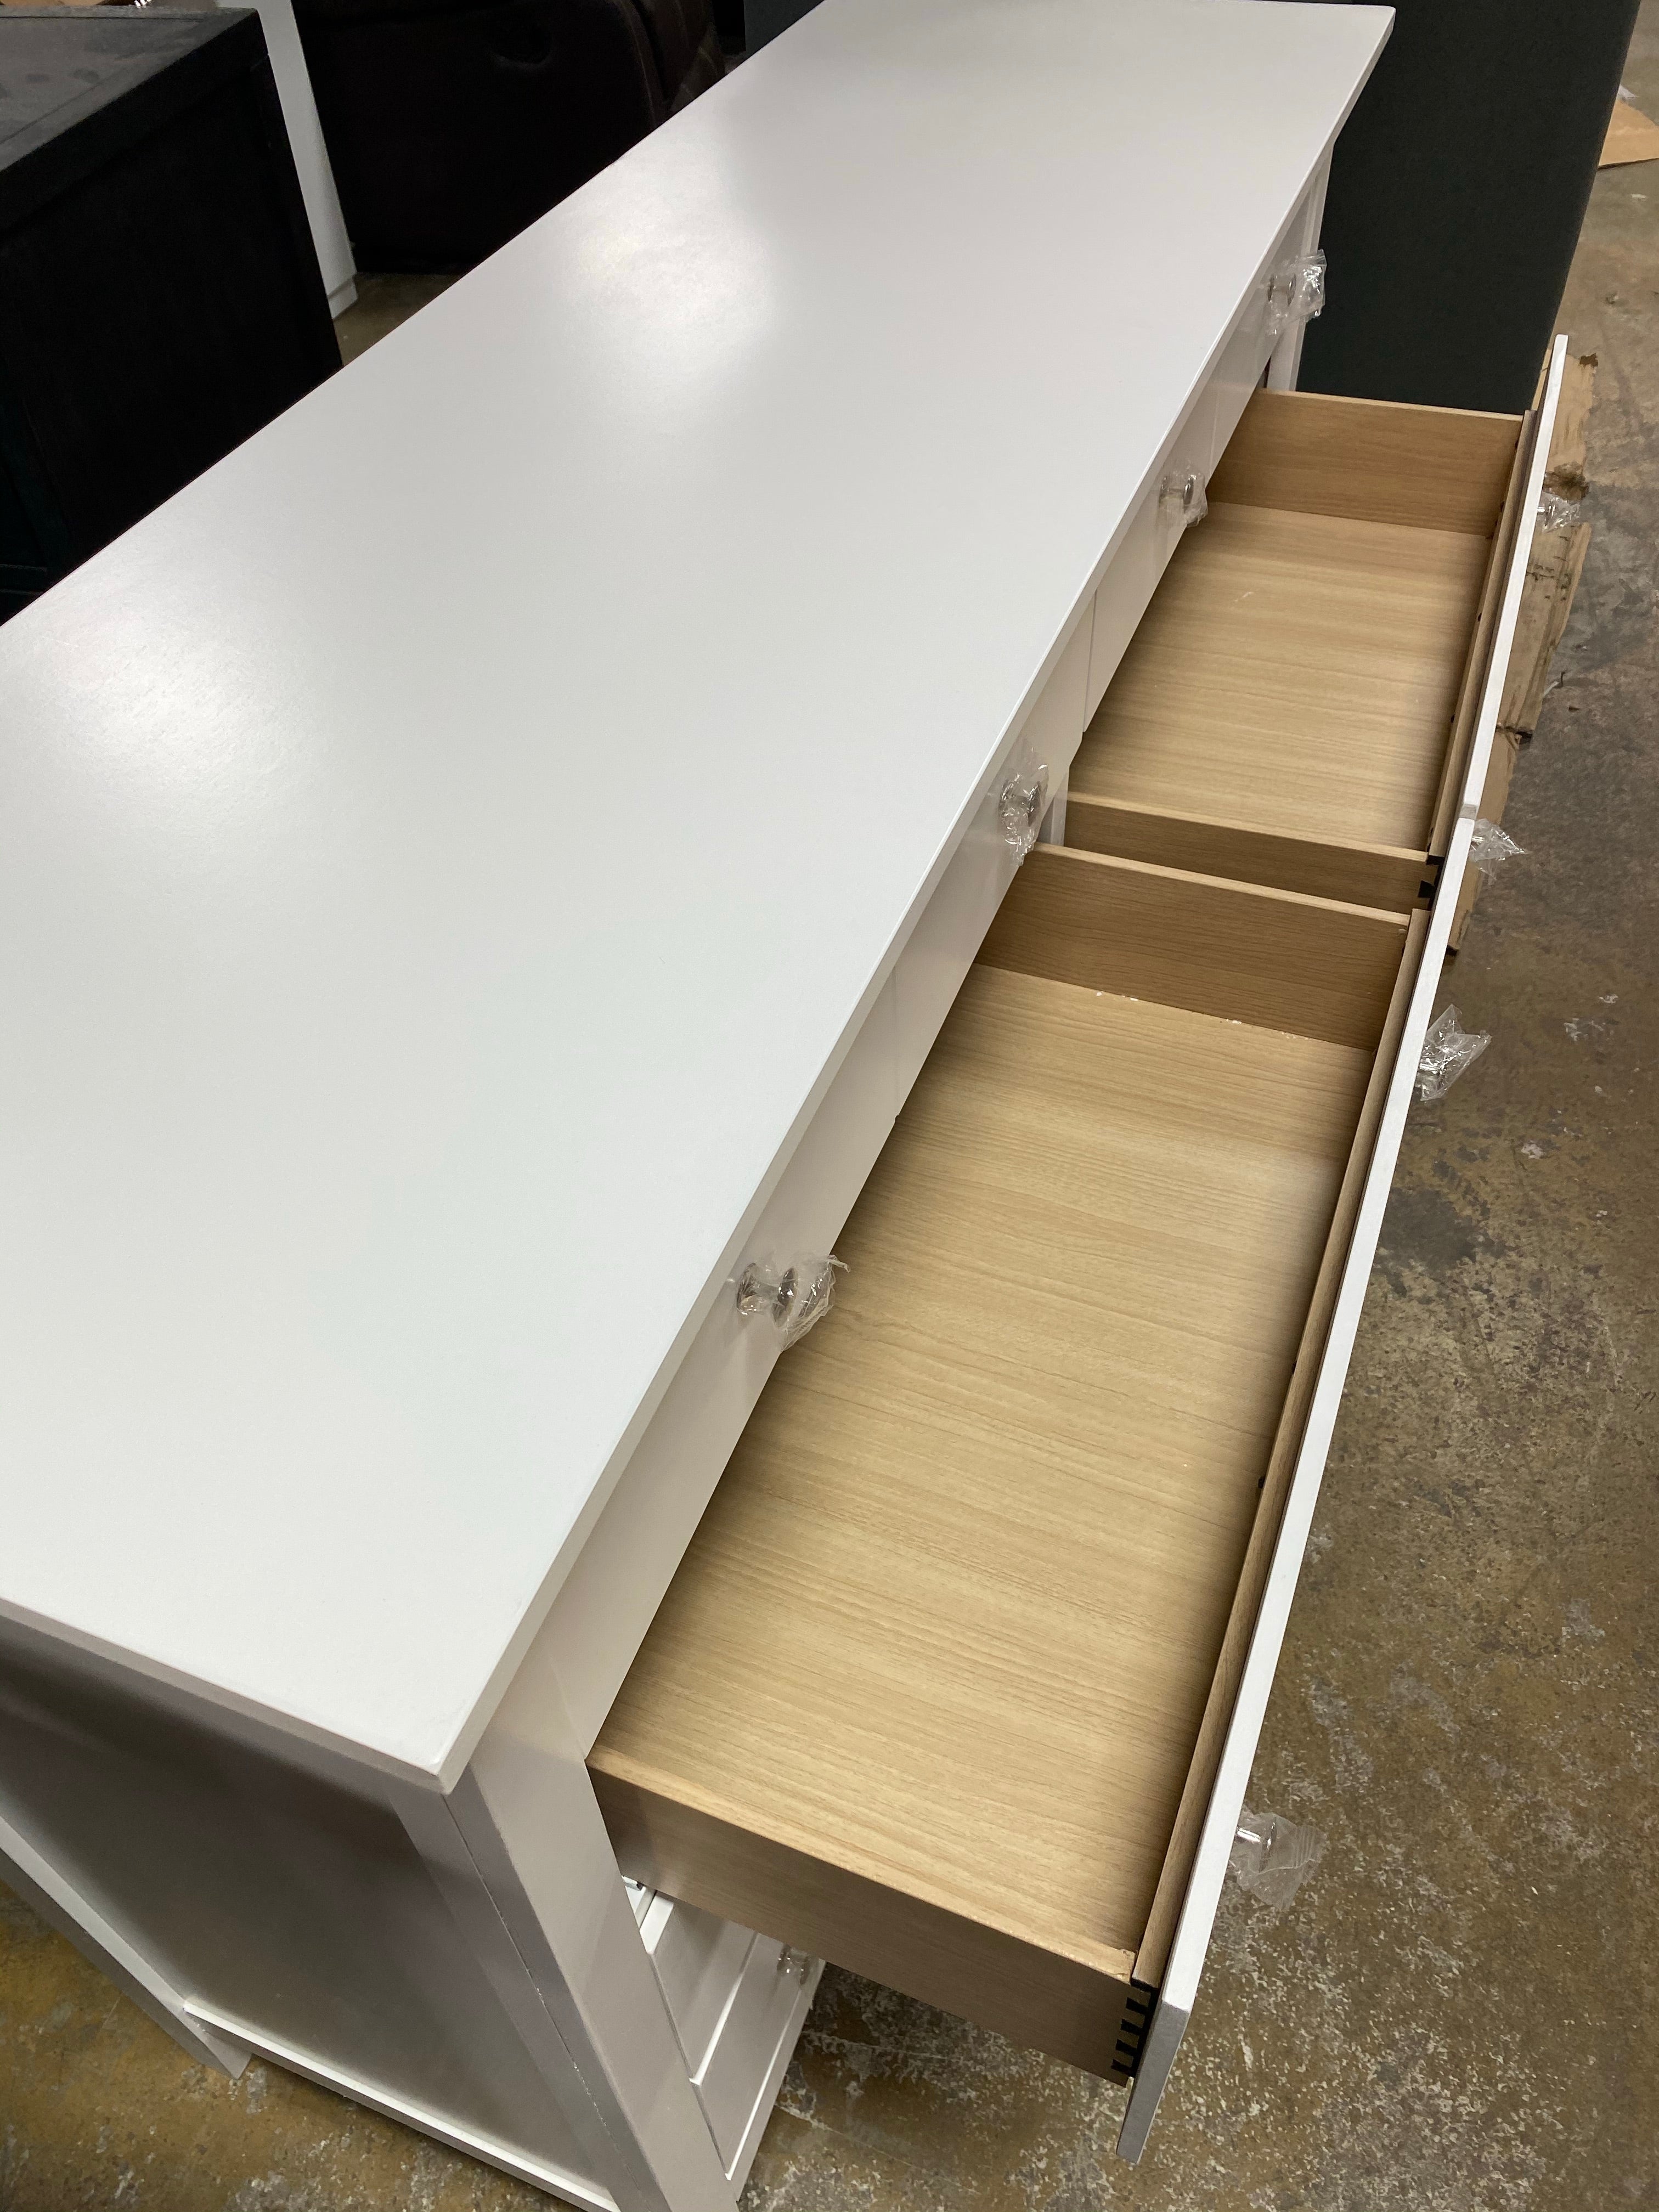 White 8-Drawer Double Dresser